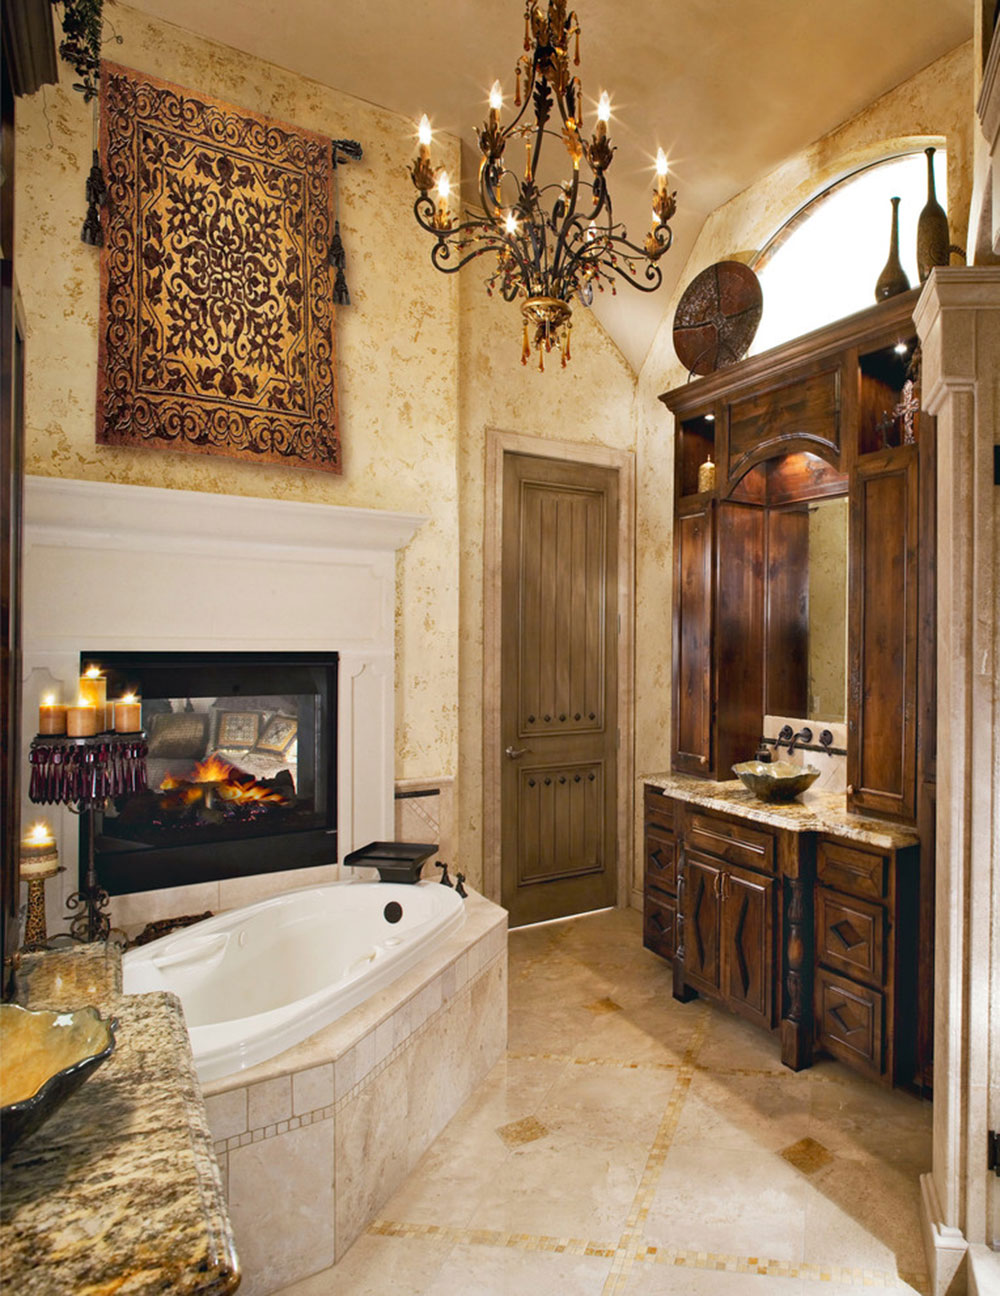 Remarkable Tuscan bathroom